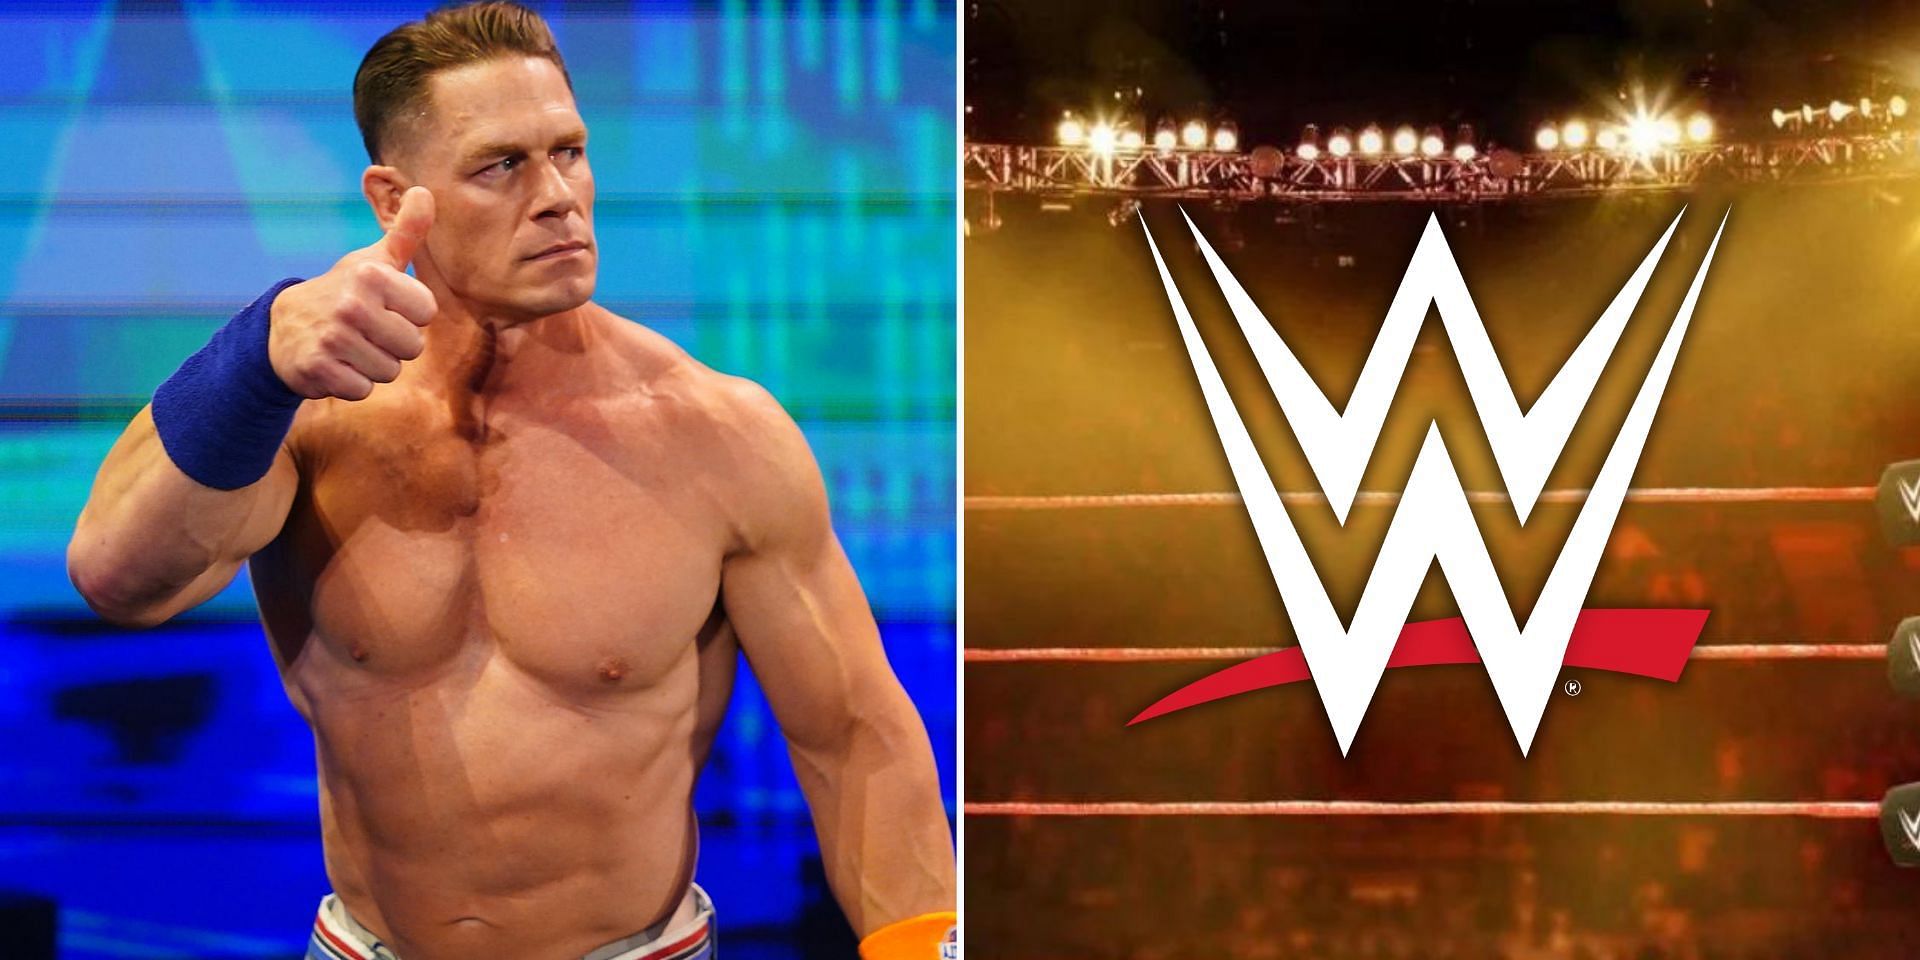 John Cena is a major WWE and Hollywood star